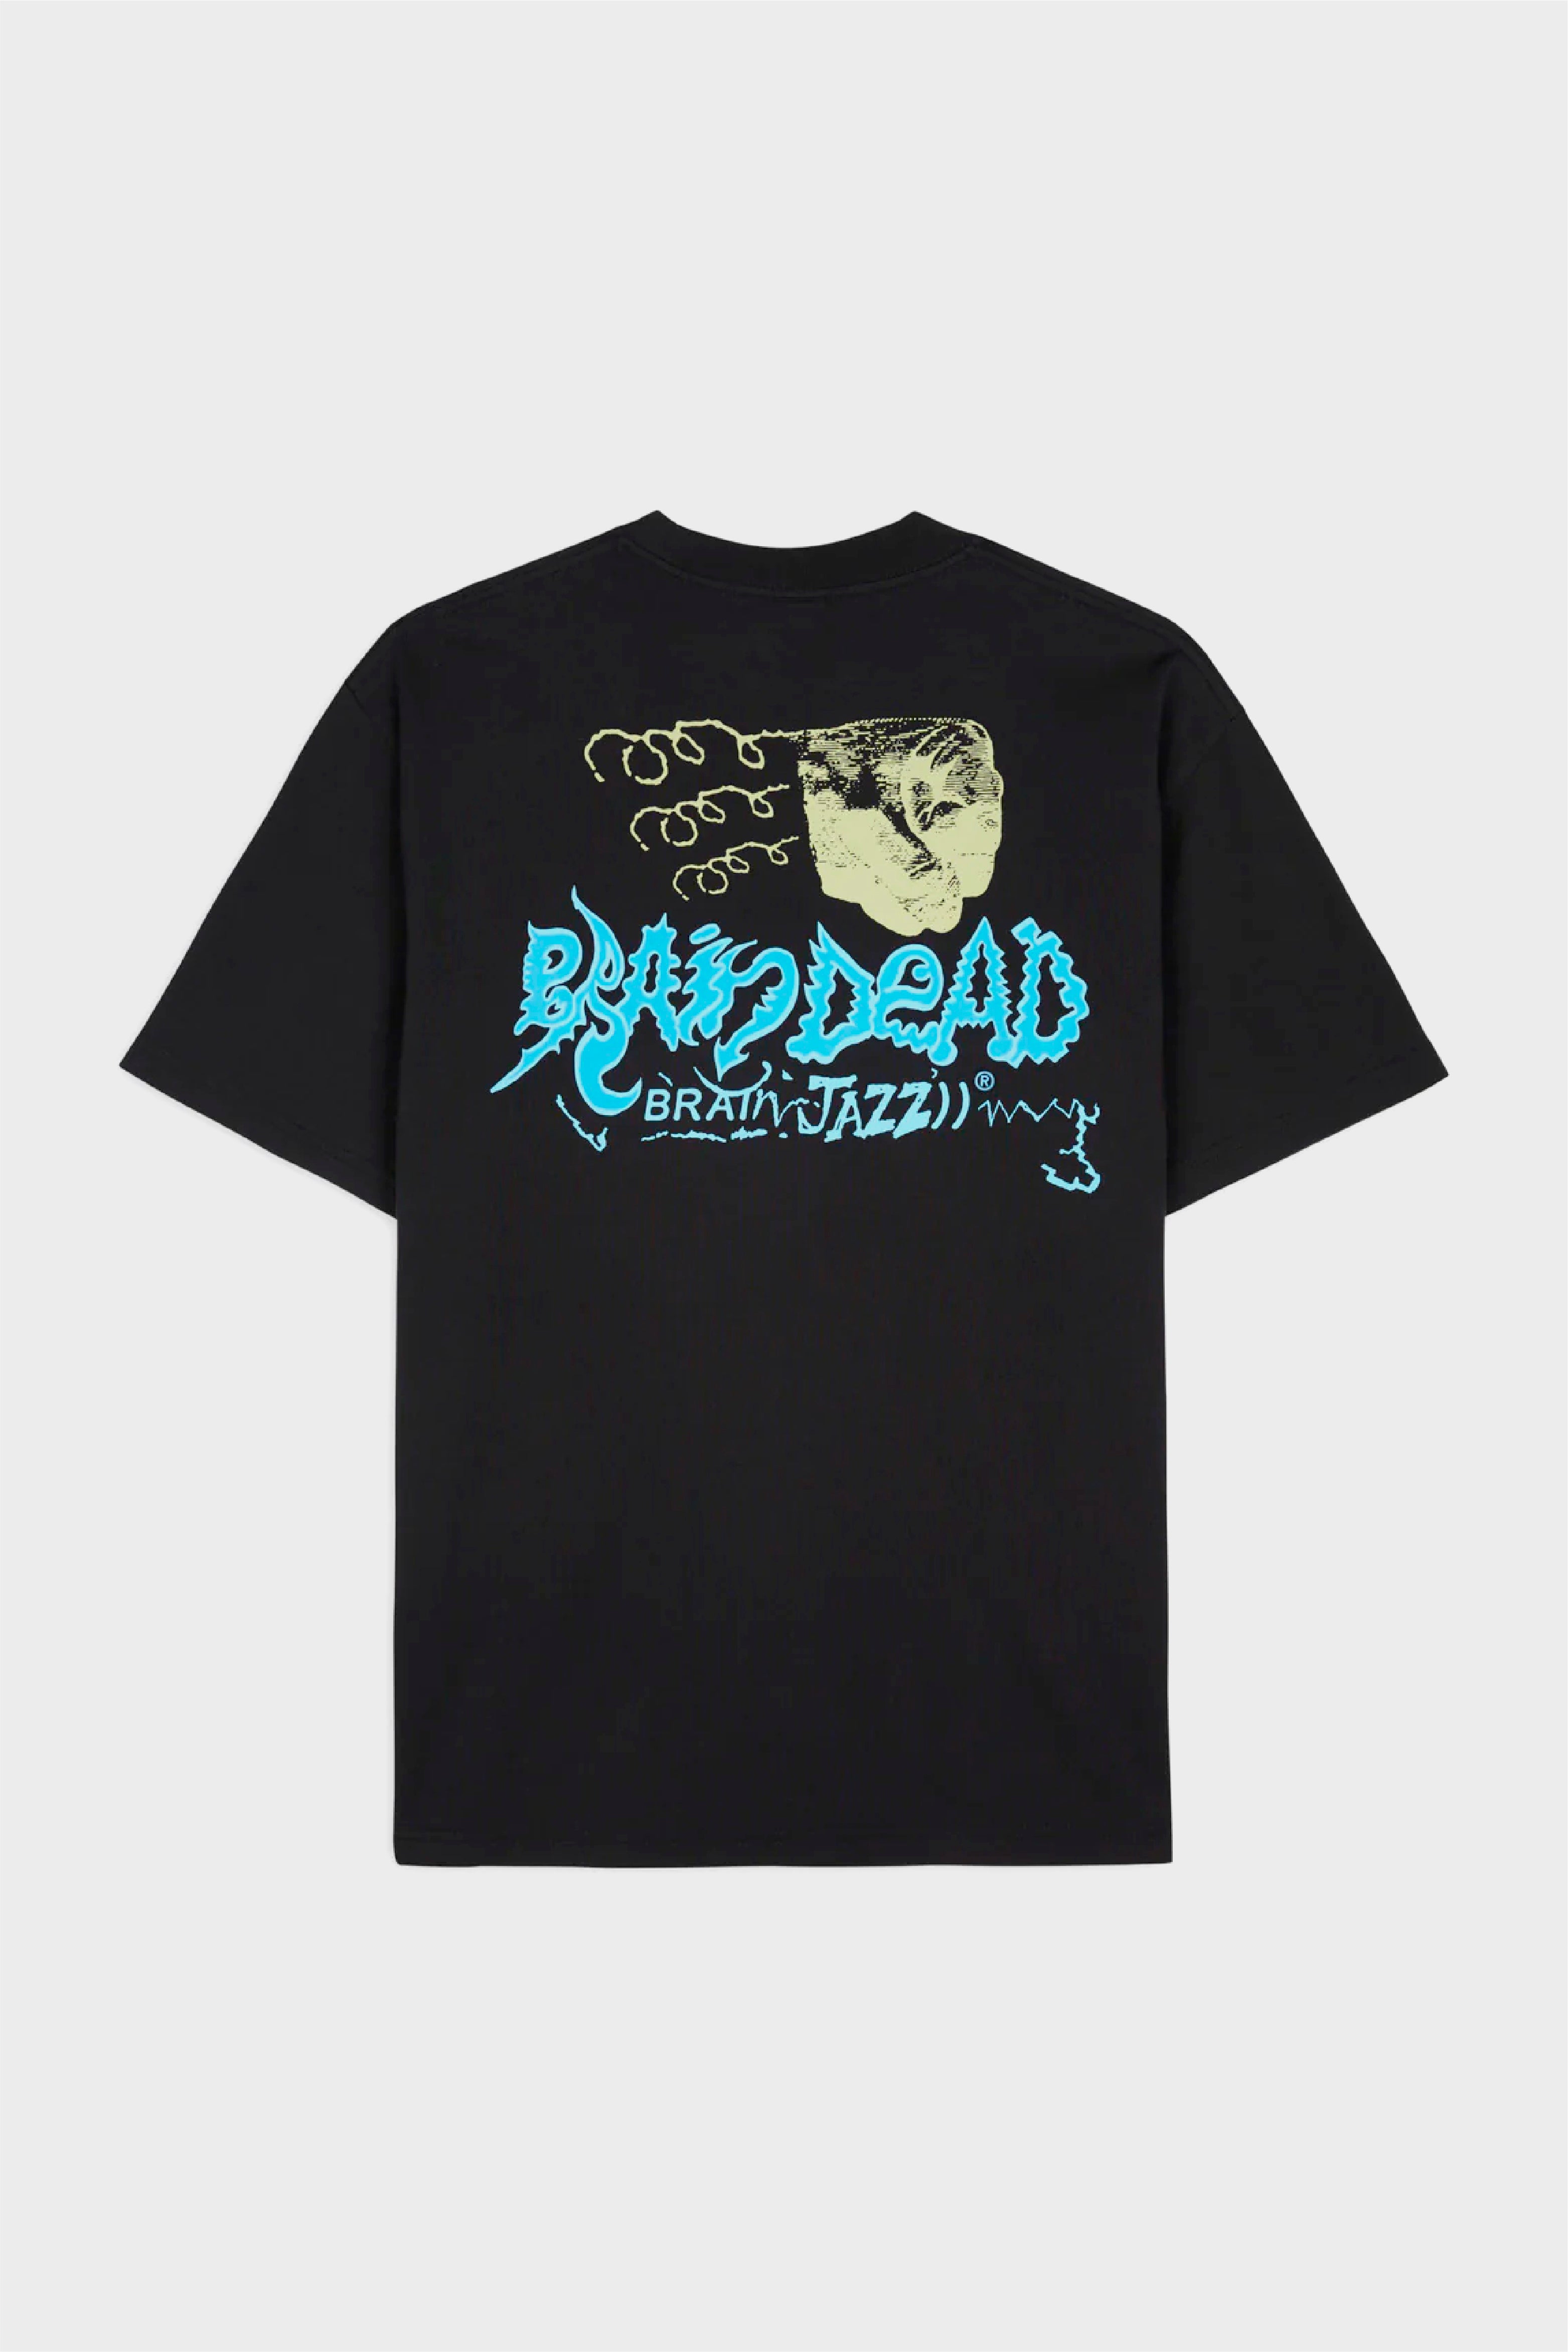 Selectshop FRAME - BRAIN DEAD Brain Jazz T-Shirt T-Shirts Concept Store Dubai